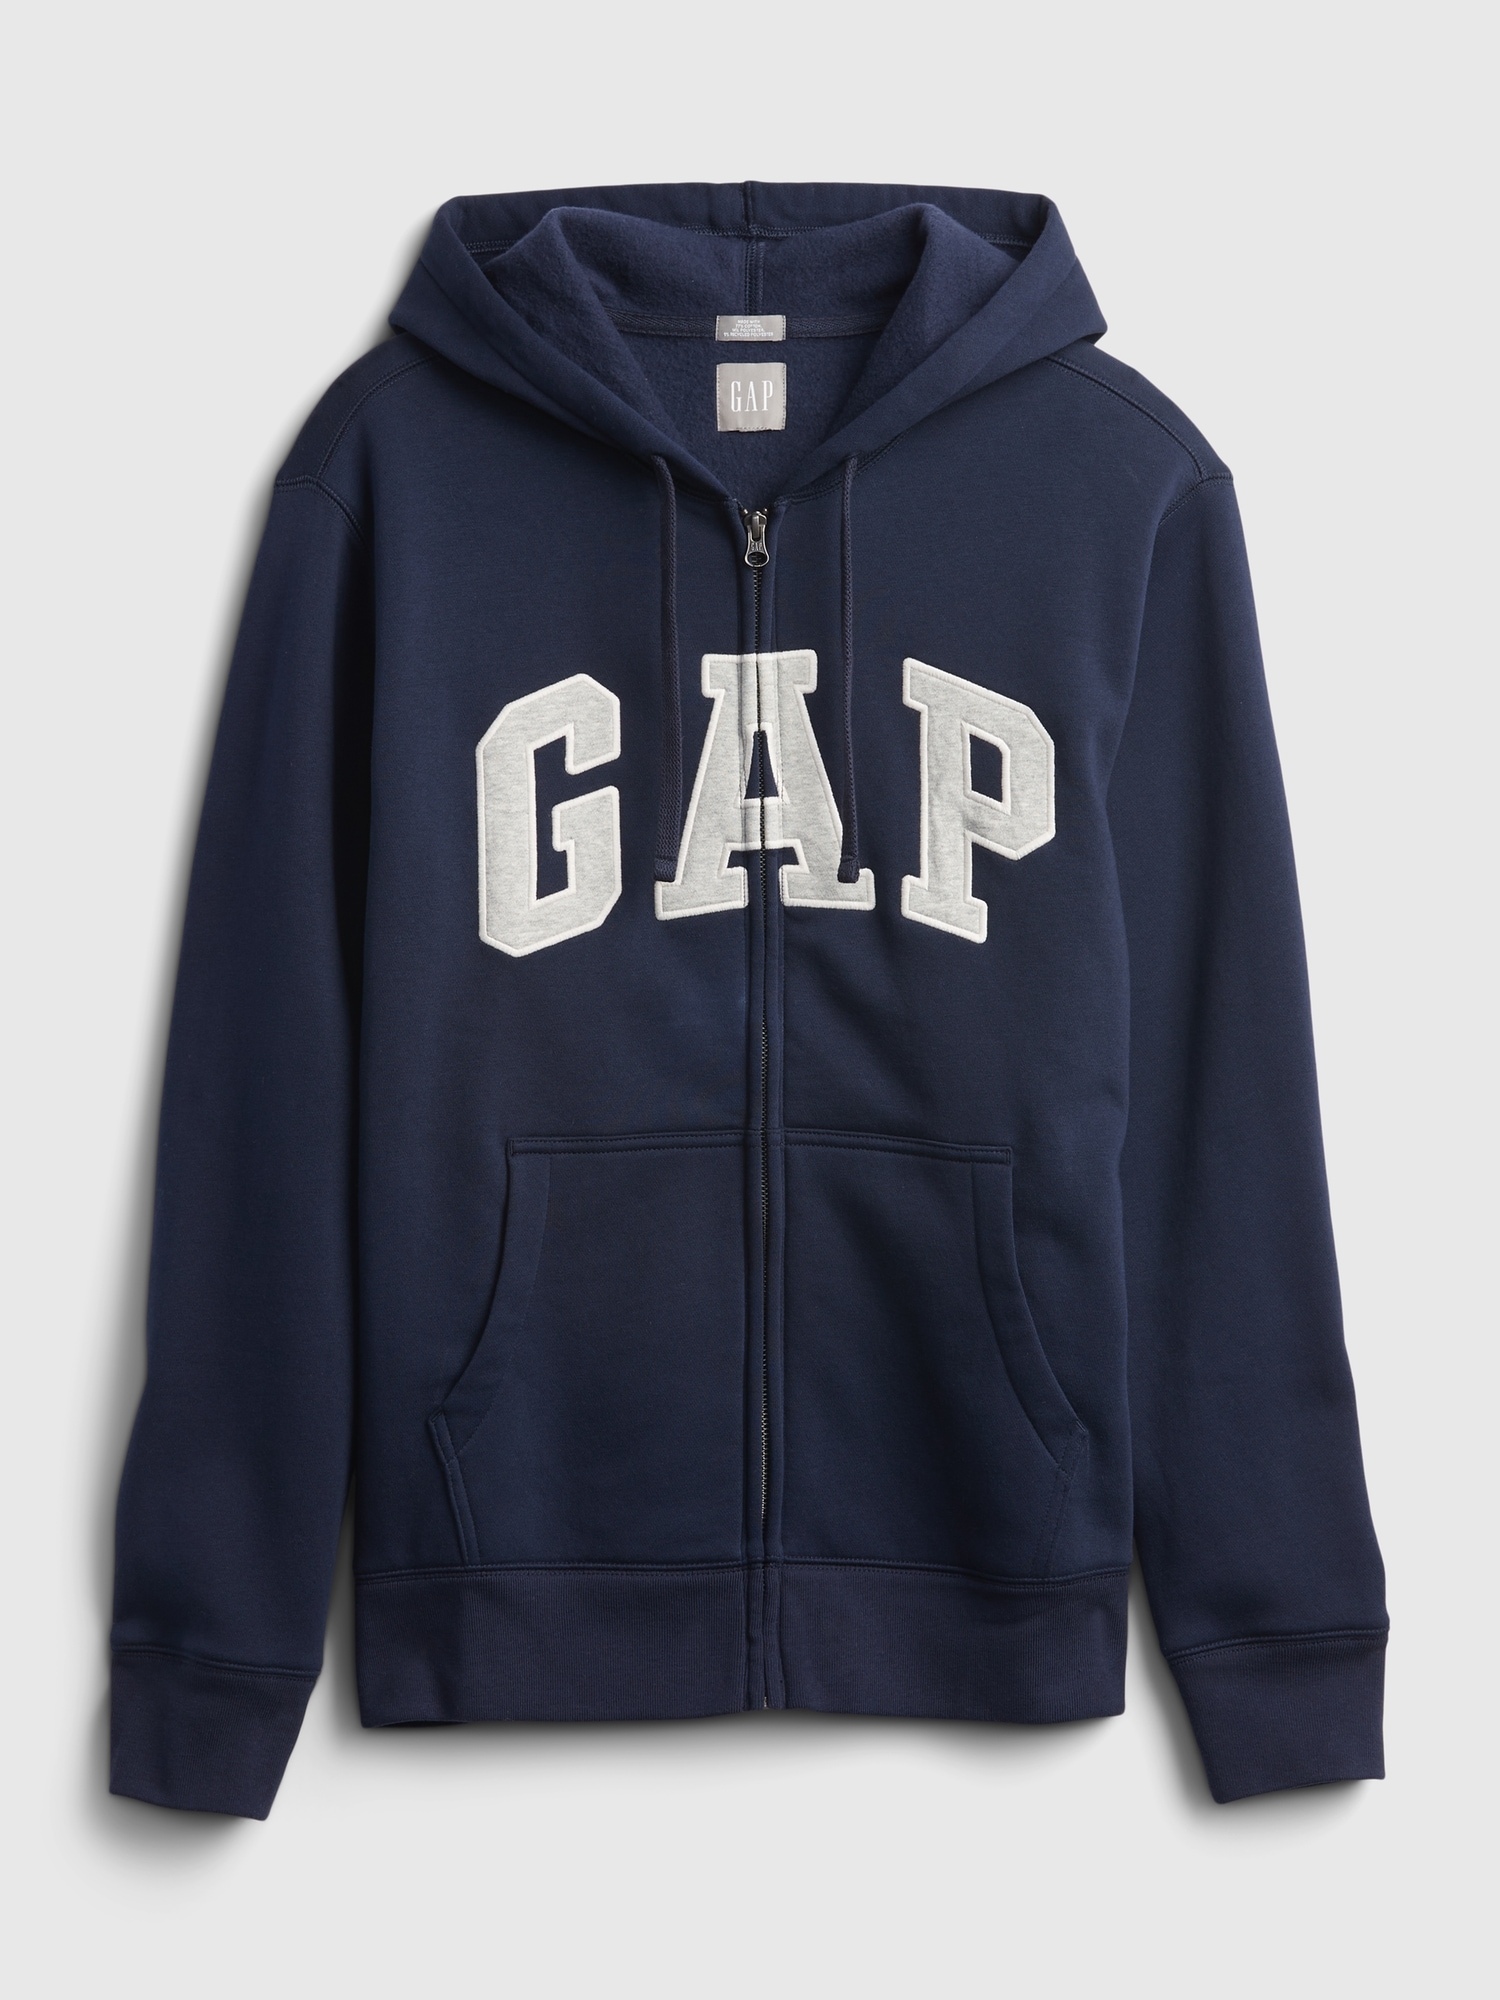 GAP Full Sleeve Applique Men Sweatshirt - Buy GAP Full Sleeve